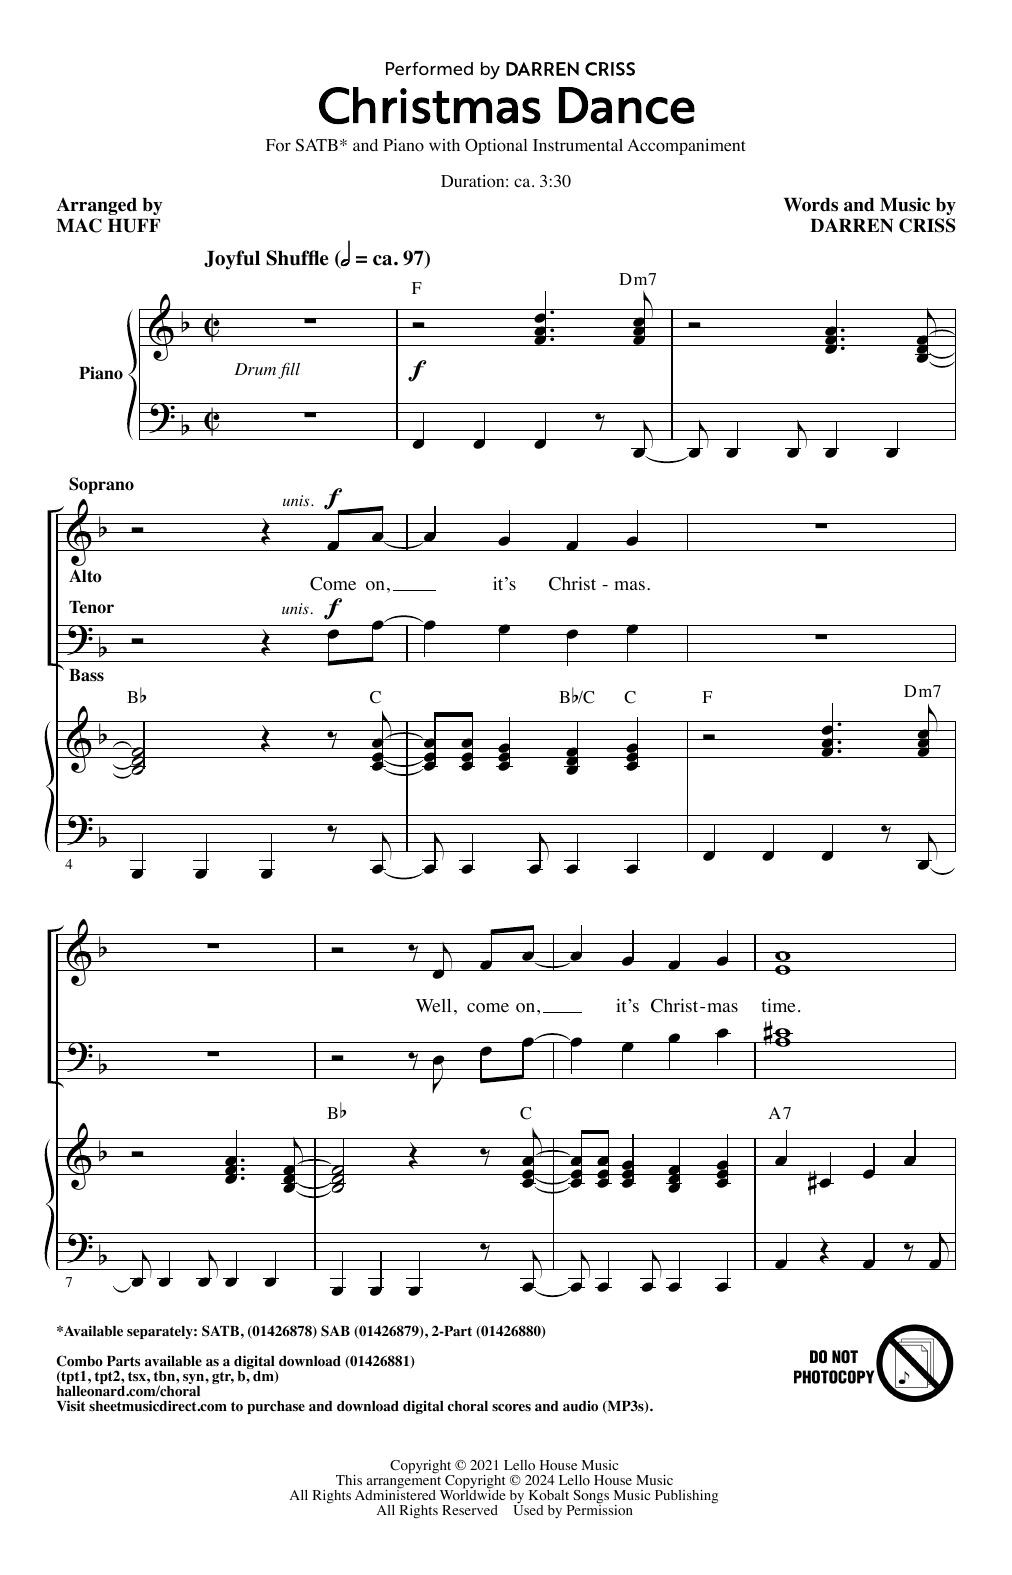 Darren Criss Christmas Dance (arr. Mac Huff) sheet music notes and chords arranged for SAB Choir